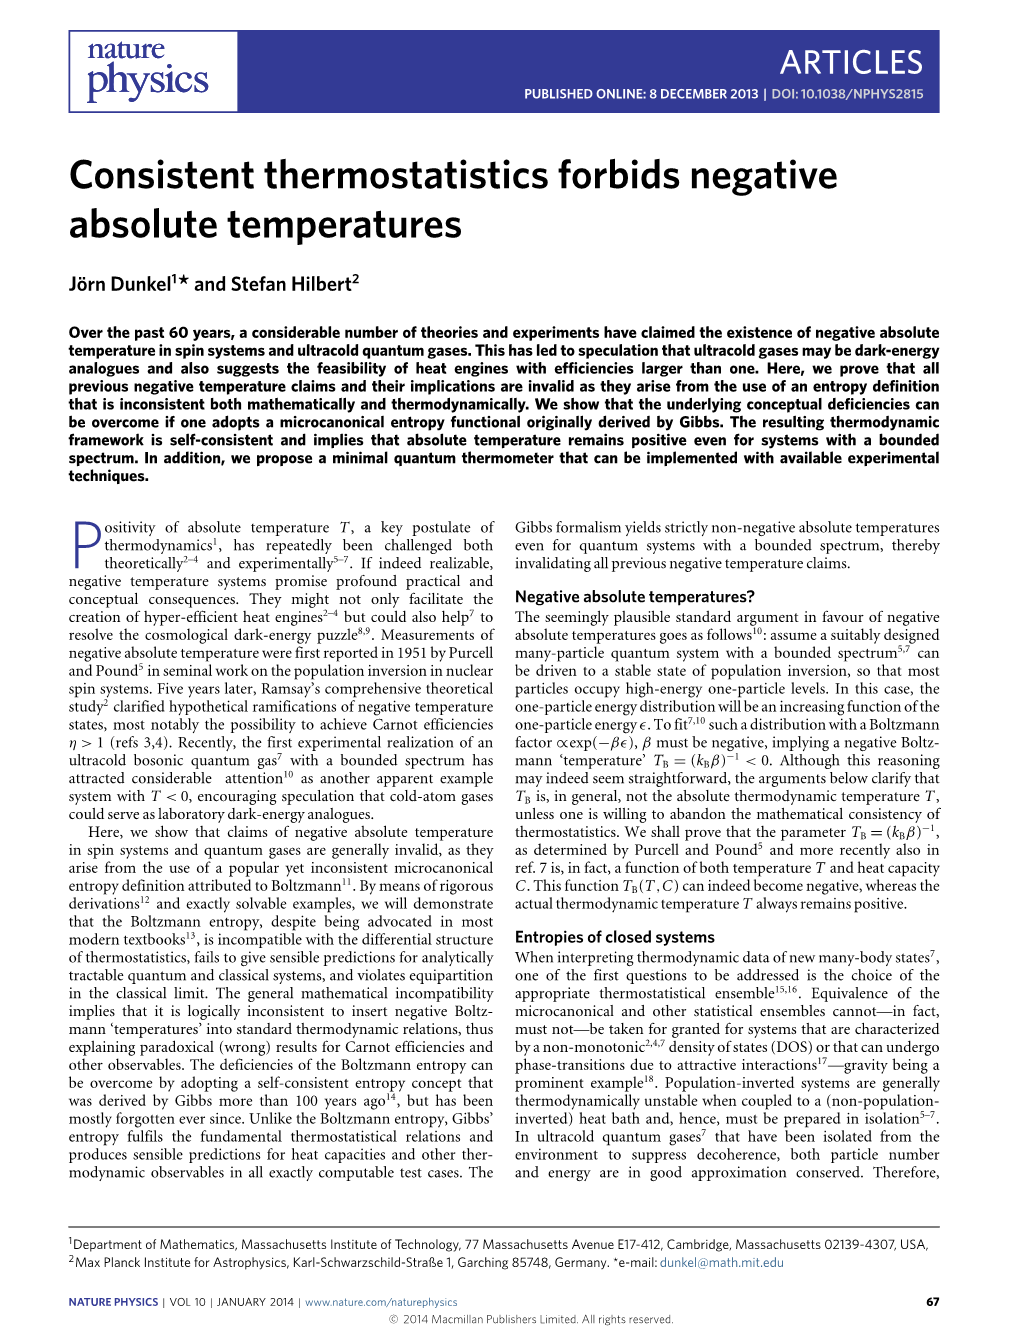 Consistent Thermostatistics Forbids Negative Absolute Temperatures